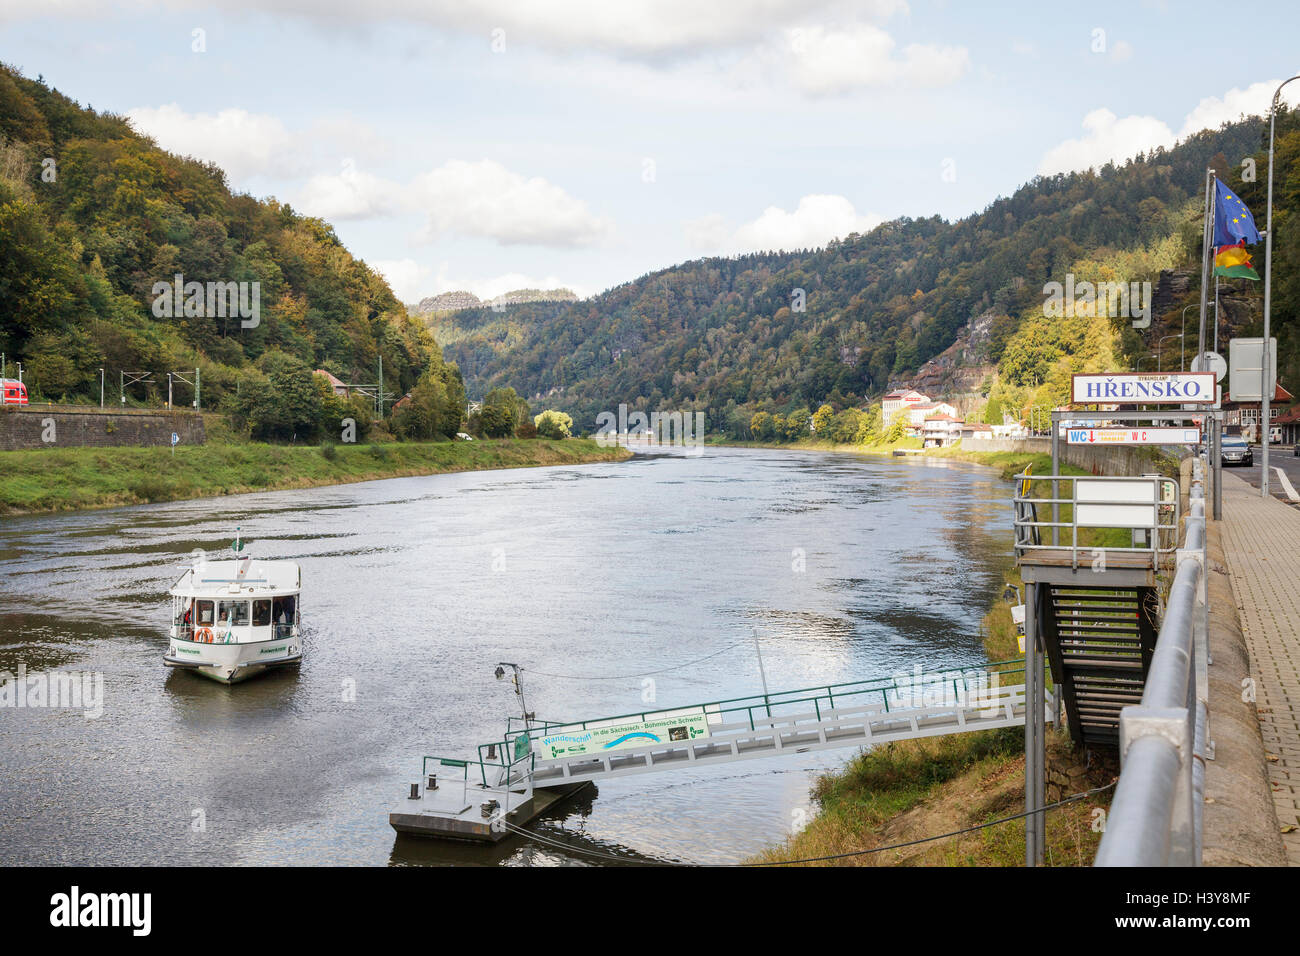 River Elbe with public transport ferry, Bohemian Switzerland, Hrensko, Usti nad Labem, Czech Republic Stock Photo